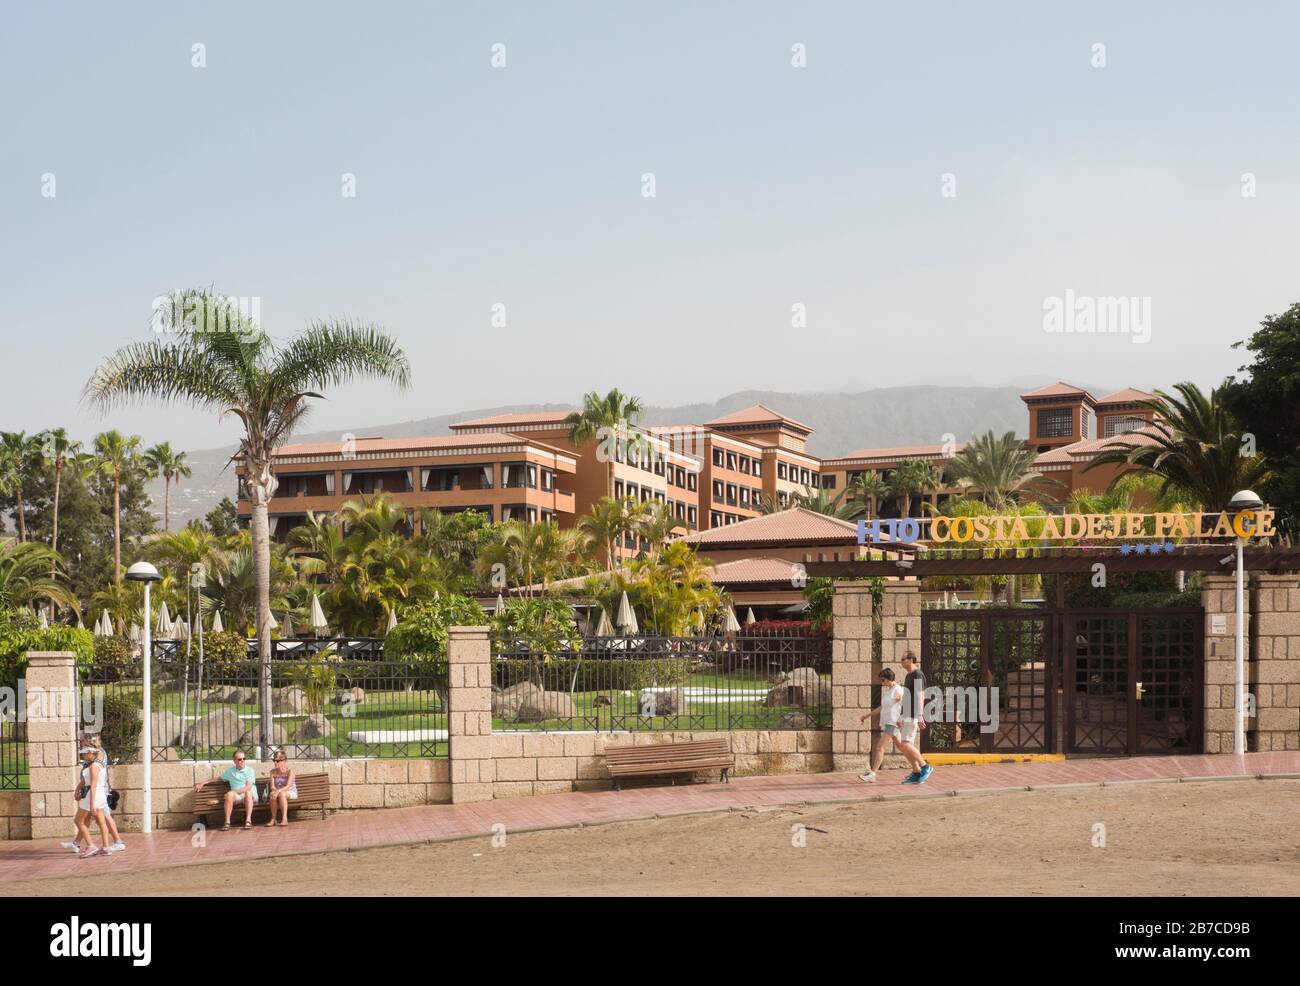 Hotel H 10 Costa Adeje Palace, albergo 4 stelle per turisti a Tenerife, vista dal lungomare Foto Stock